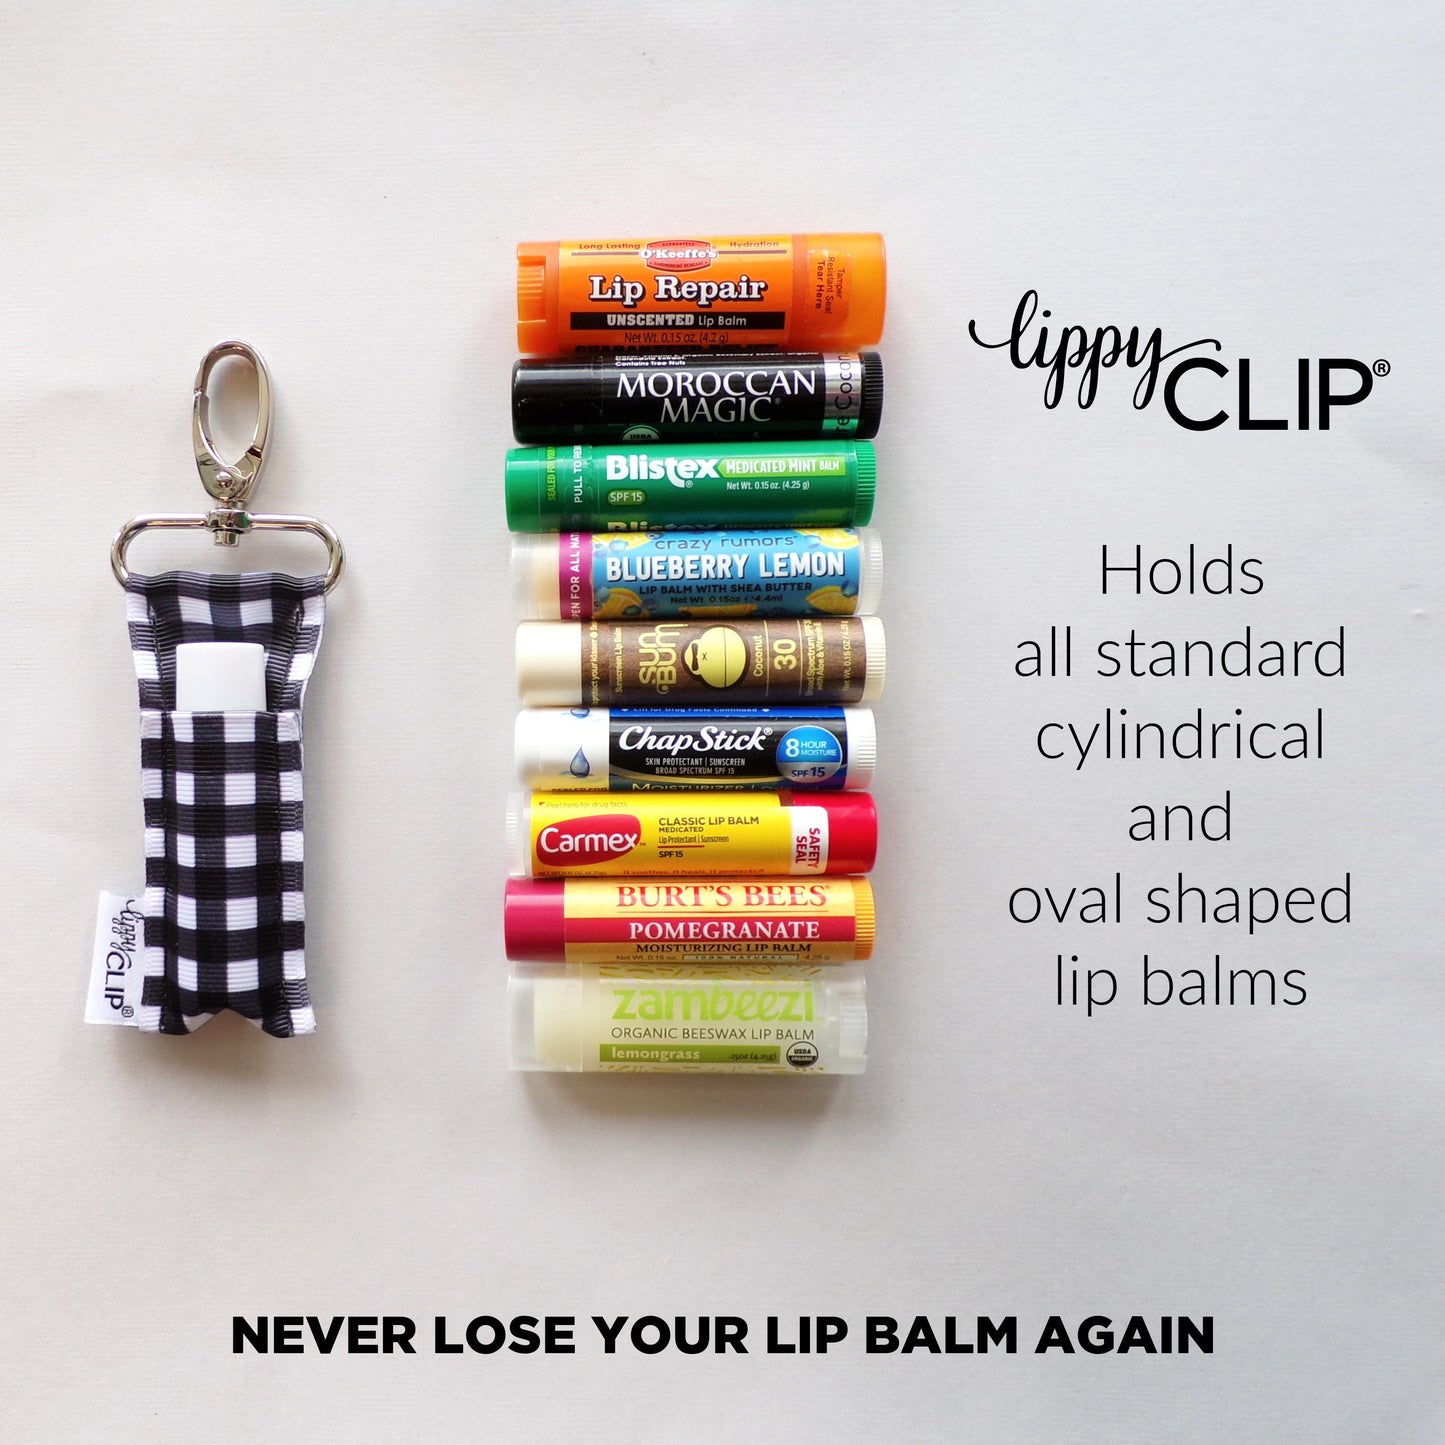 Hot Air Balloons LippyClip® Lip Balm Holder